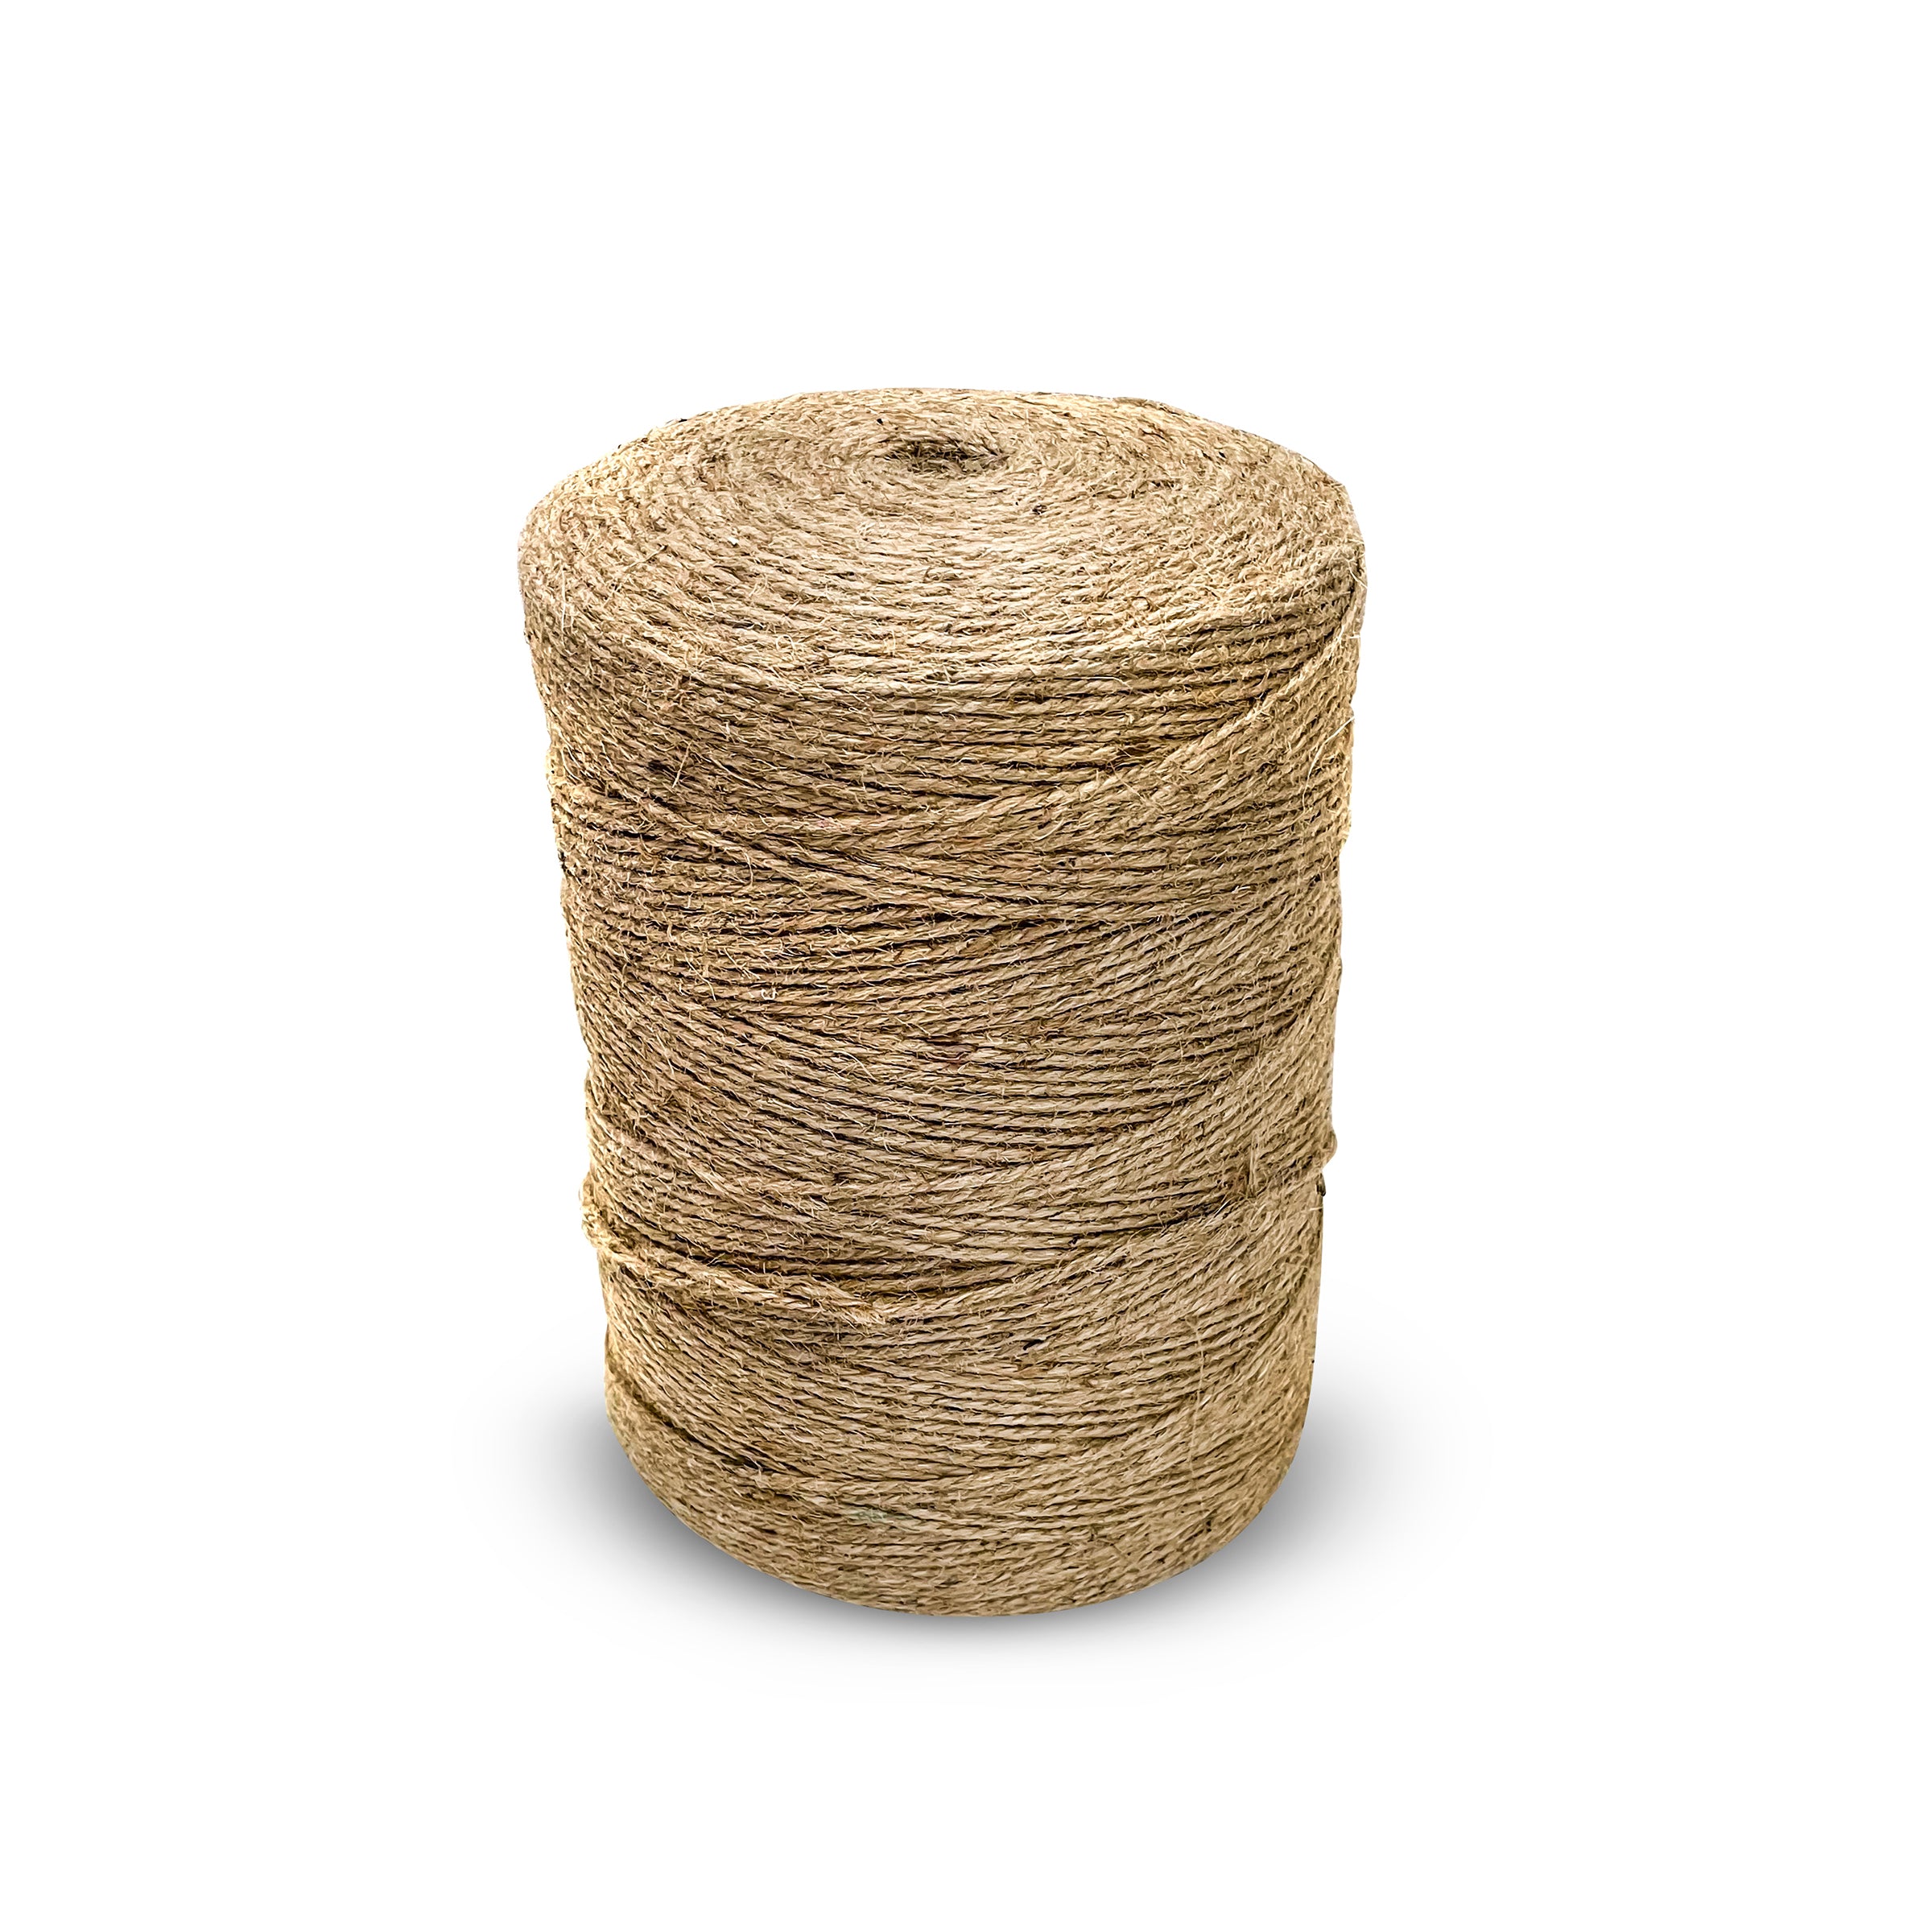 baling baler hay bale twine natural fibre rope